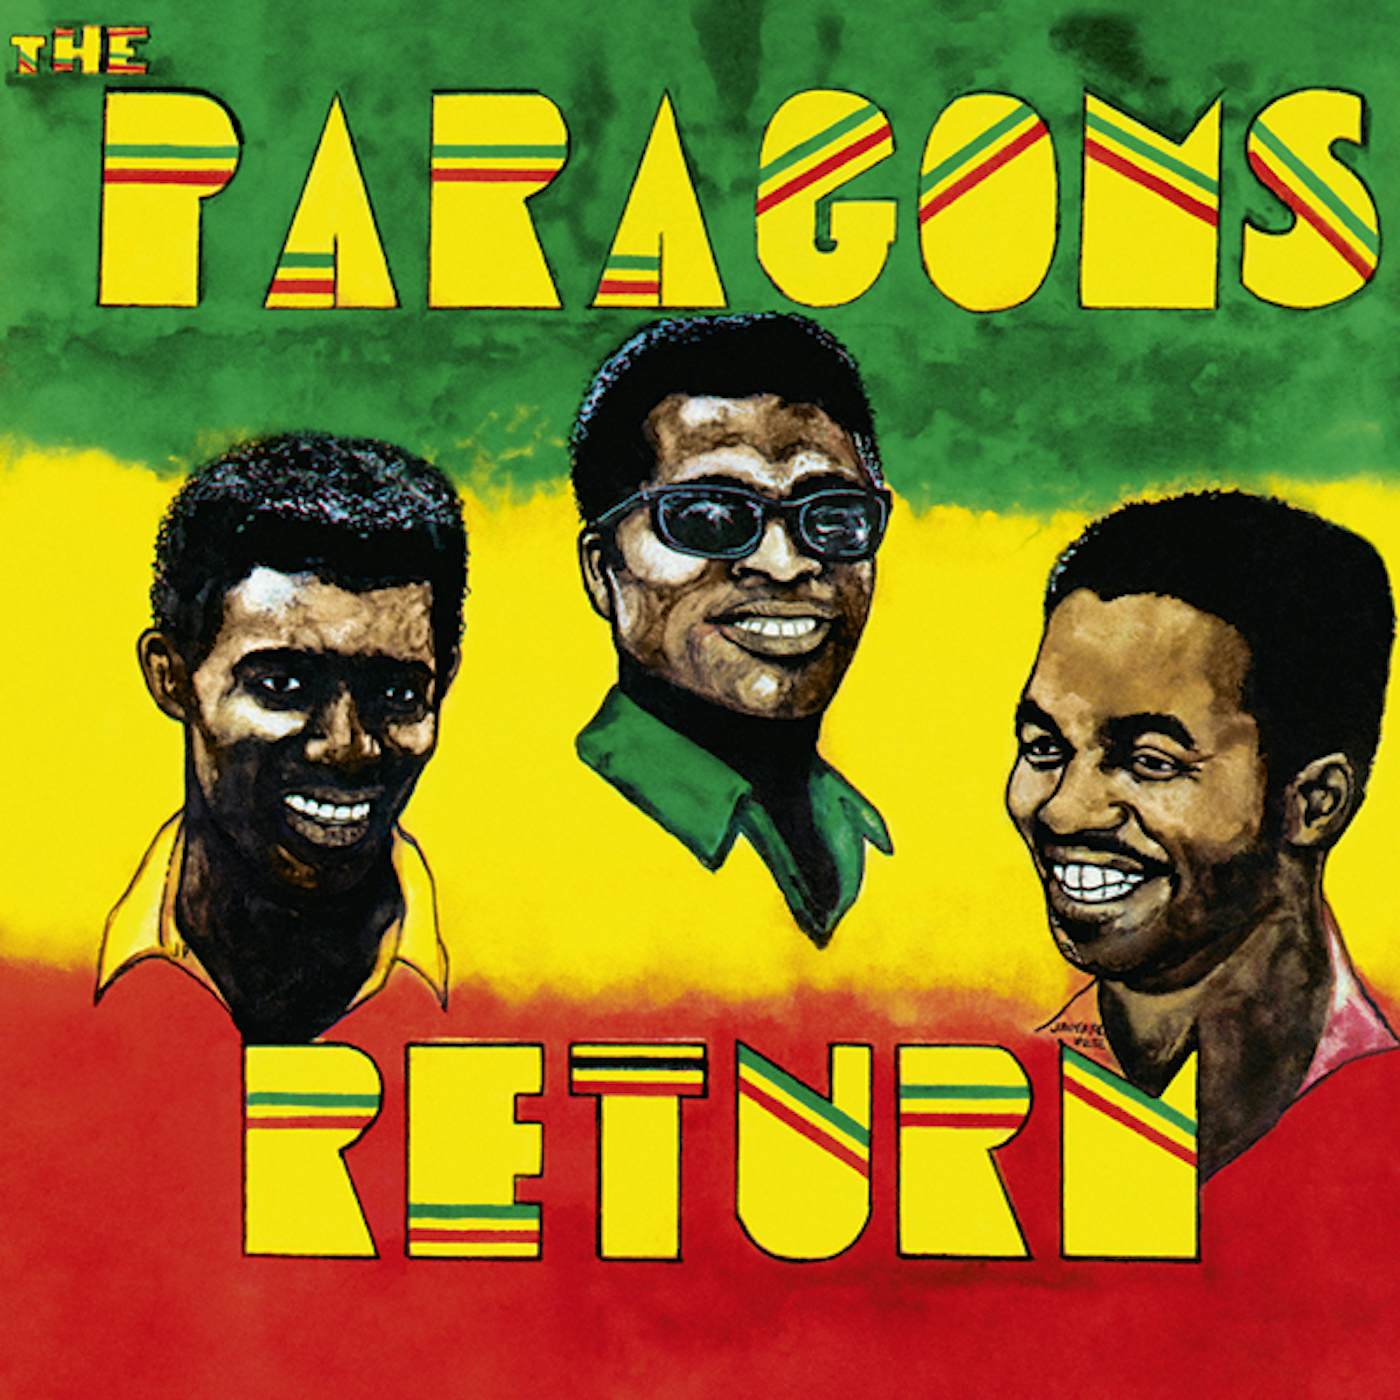 The Paragons RETURN CD